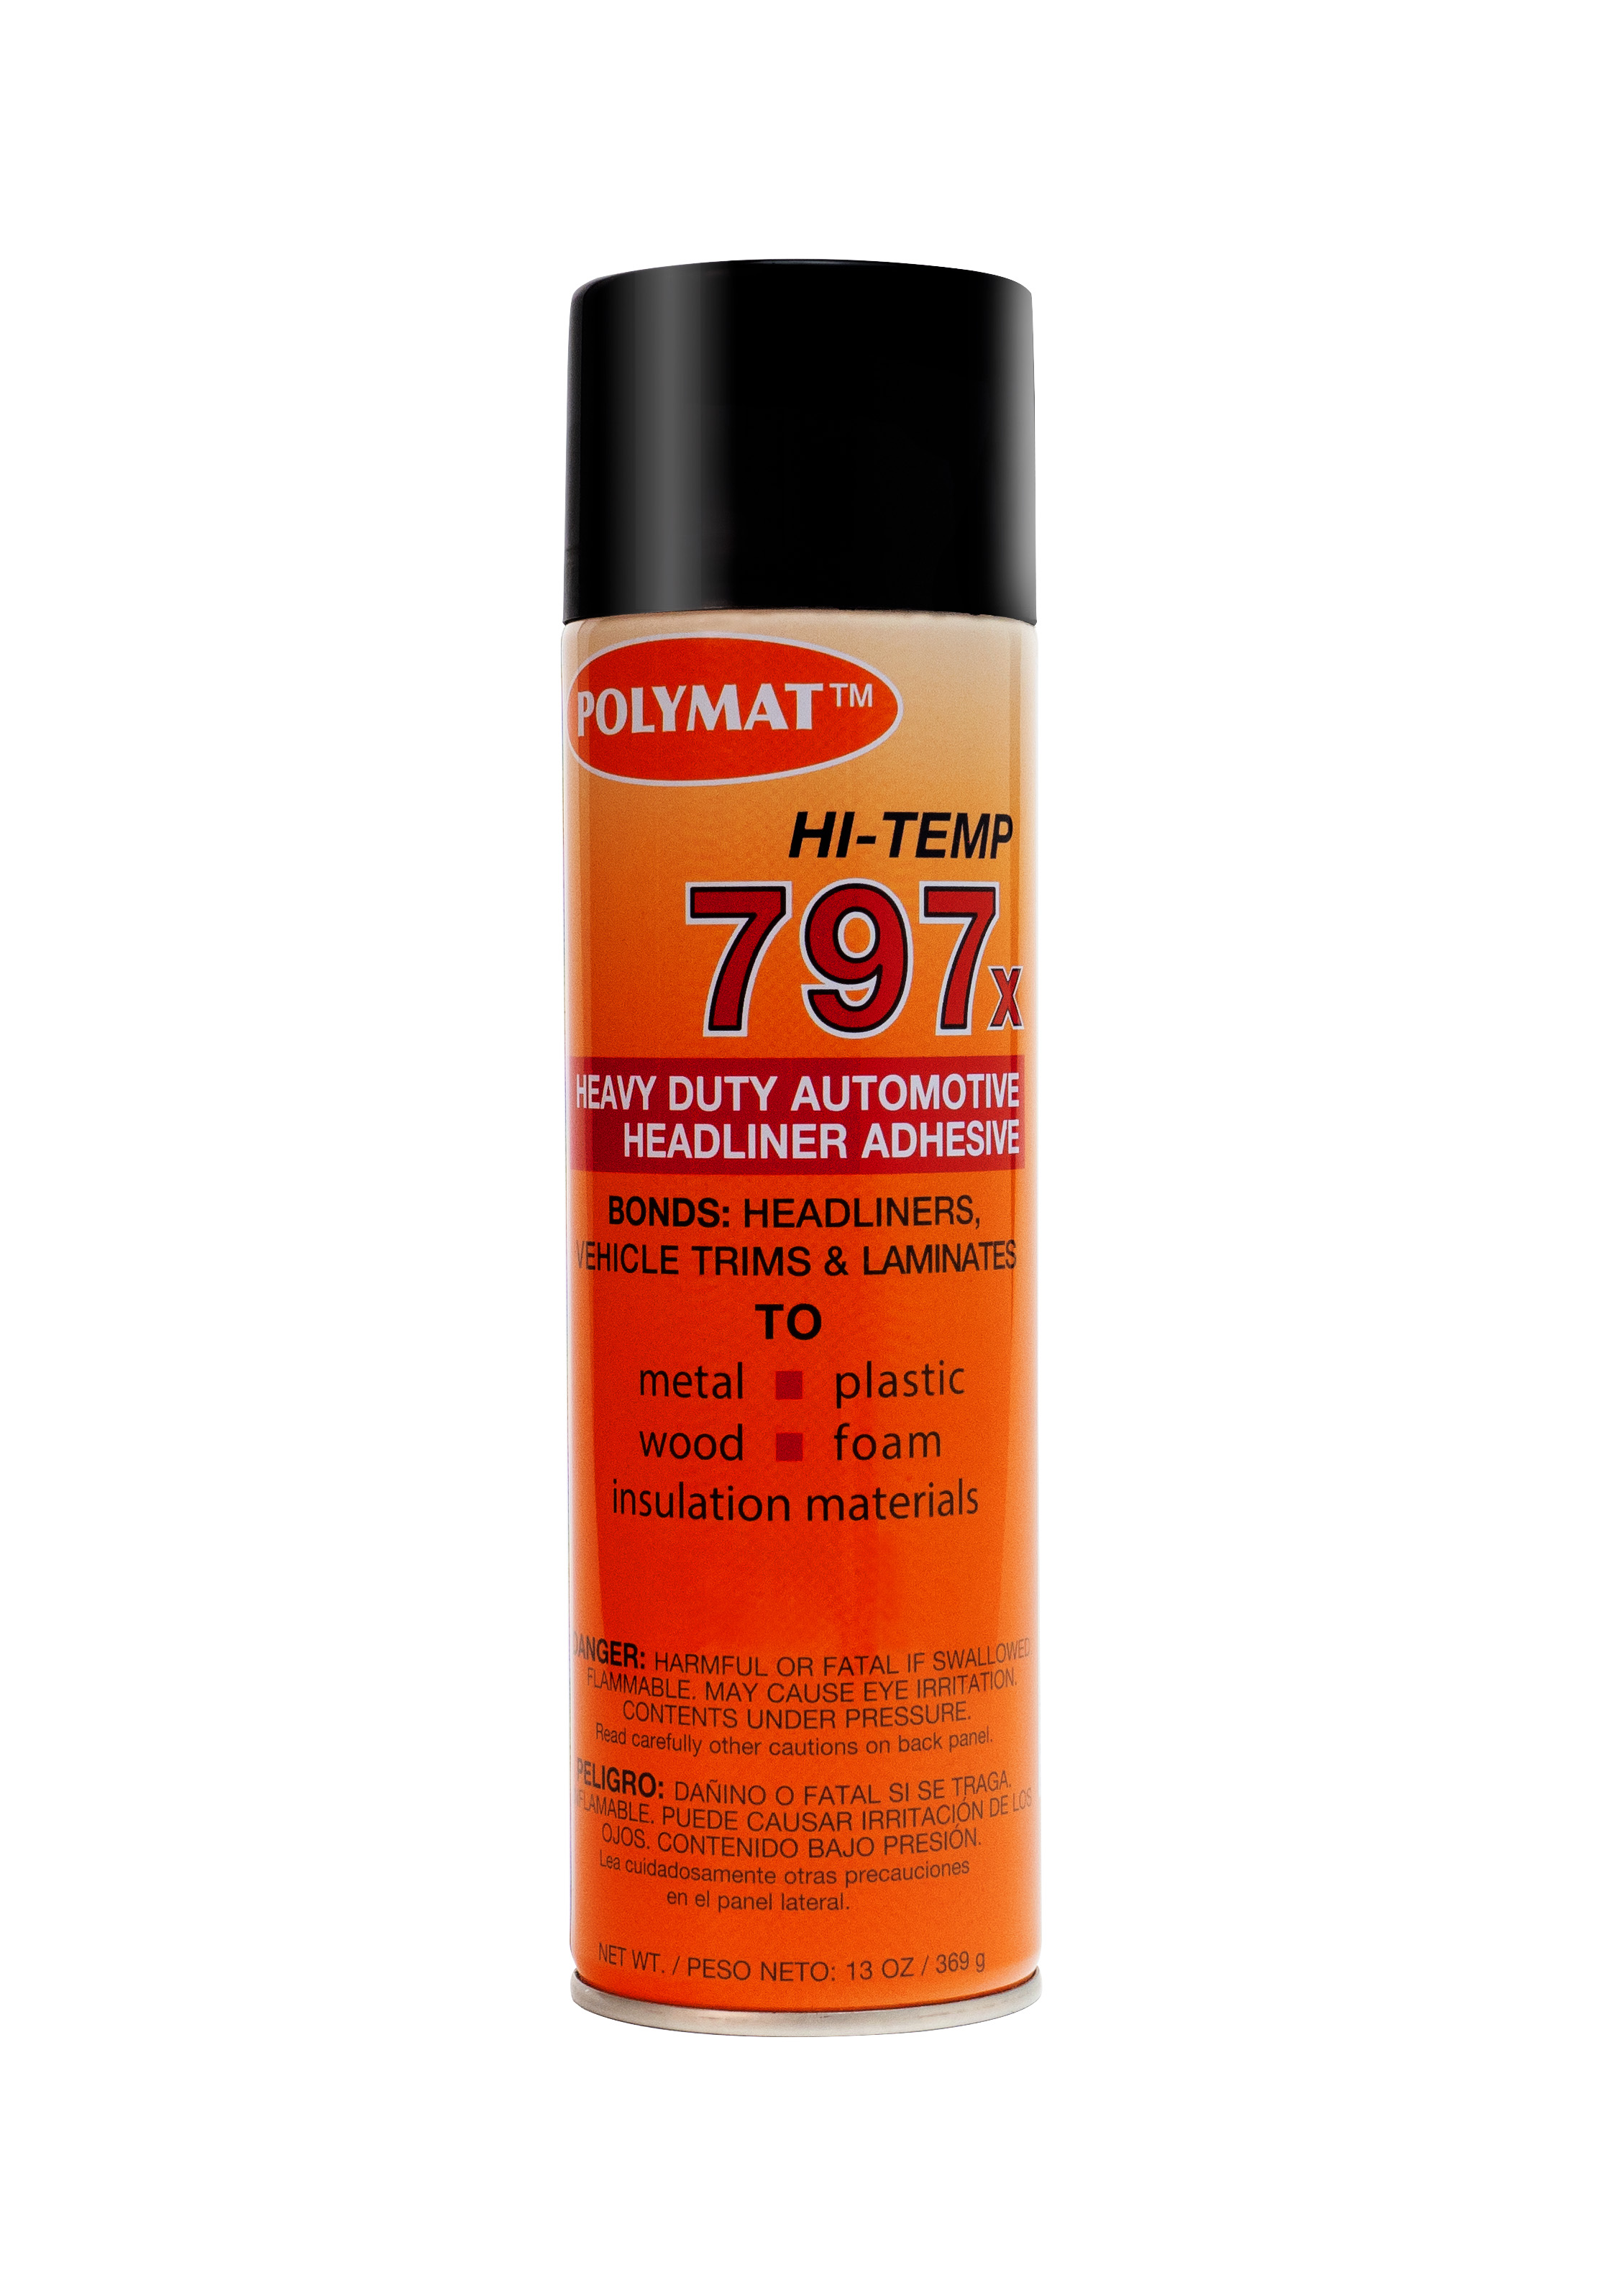 Polymat 797 High-Temp Adhesive Automotive Vehicle Car Headliner Glue [160f]